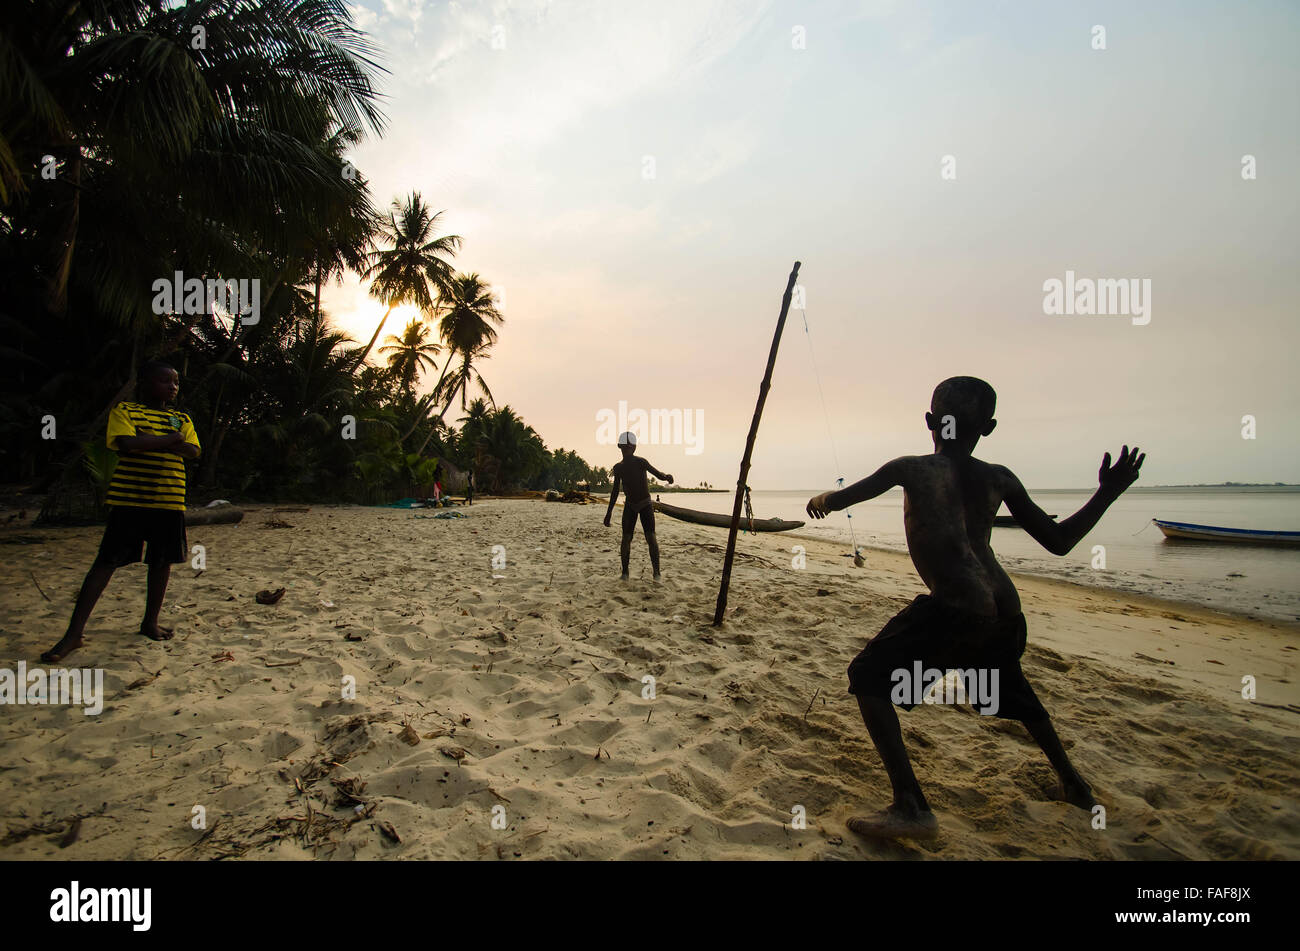 Boys playing a game on a beach on Yele Island, Turtle Islands, Sierra Leone. Stock Photo